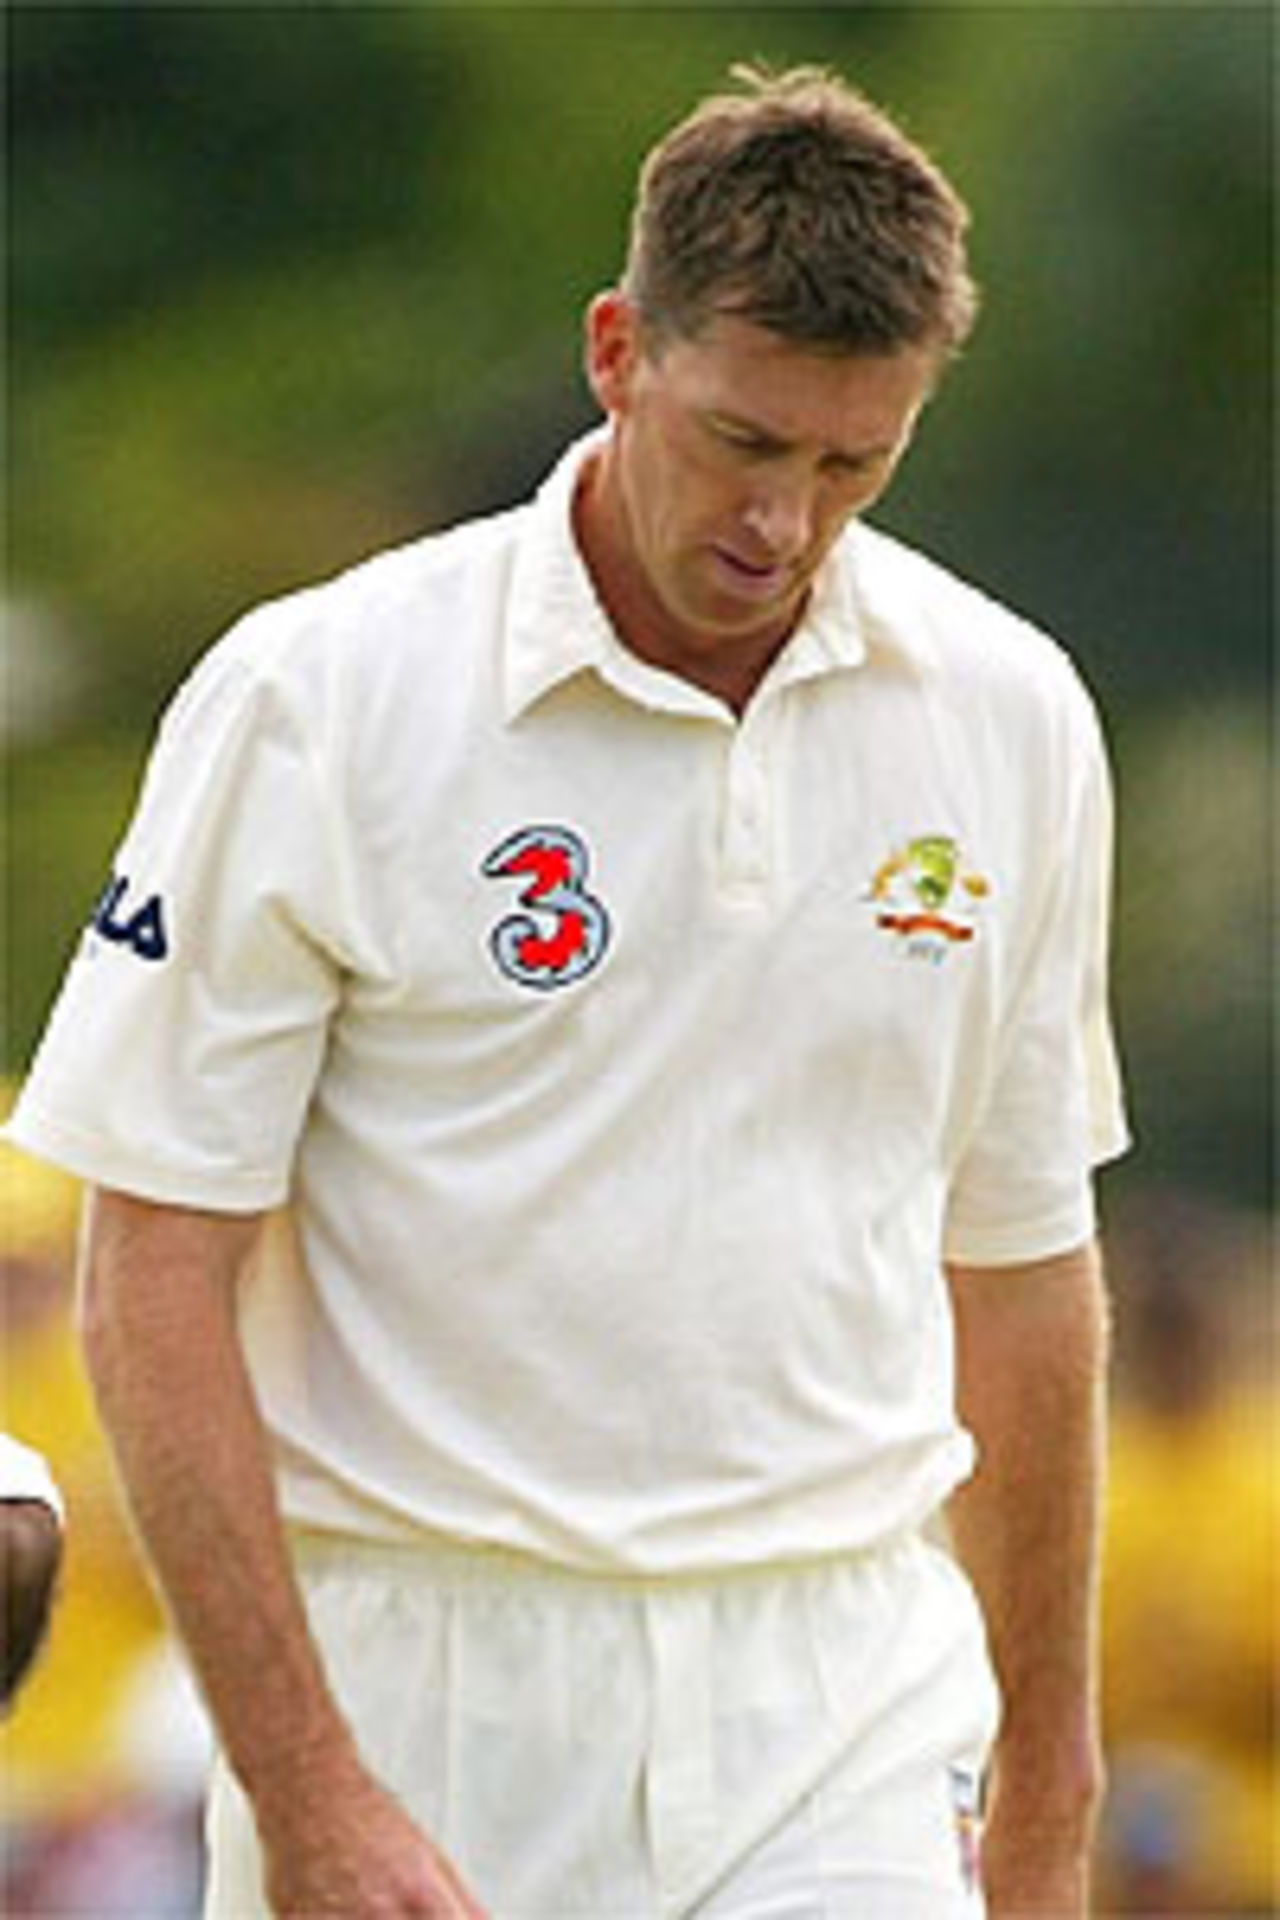 CAIRNS, AUSTRALIA - JULY 25: Glenn McGrath of Australia looks on as the Bangladesh batsman take a run during day one of The Second Test between Australia and Bangladesh played on July 25, 2003 at The Bundaberg Rum Stadium, Cairns, Australia